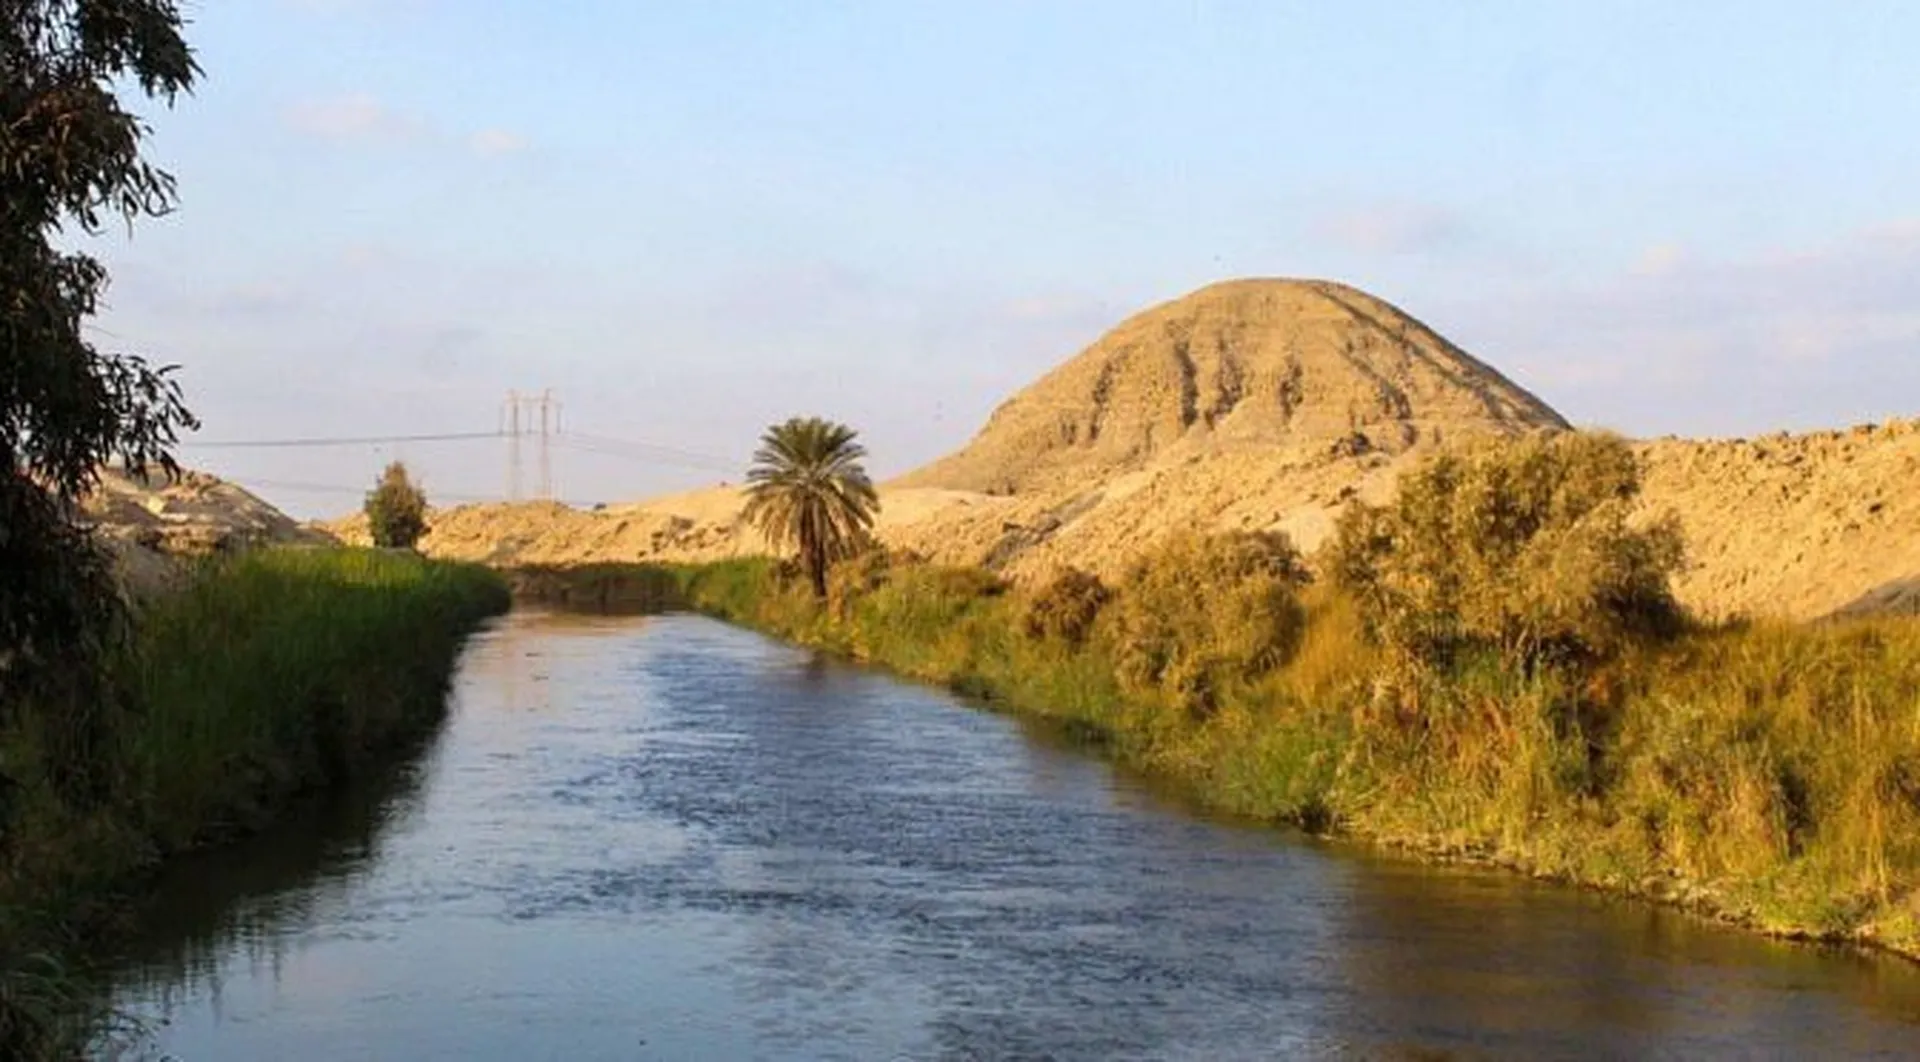 Hawara Pyramid